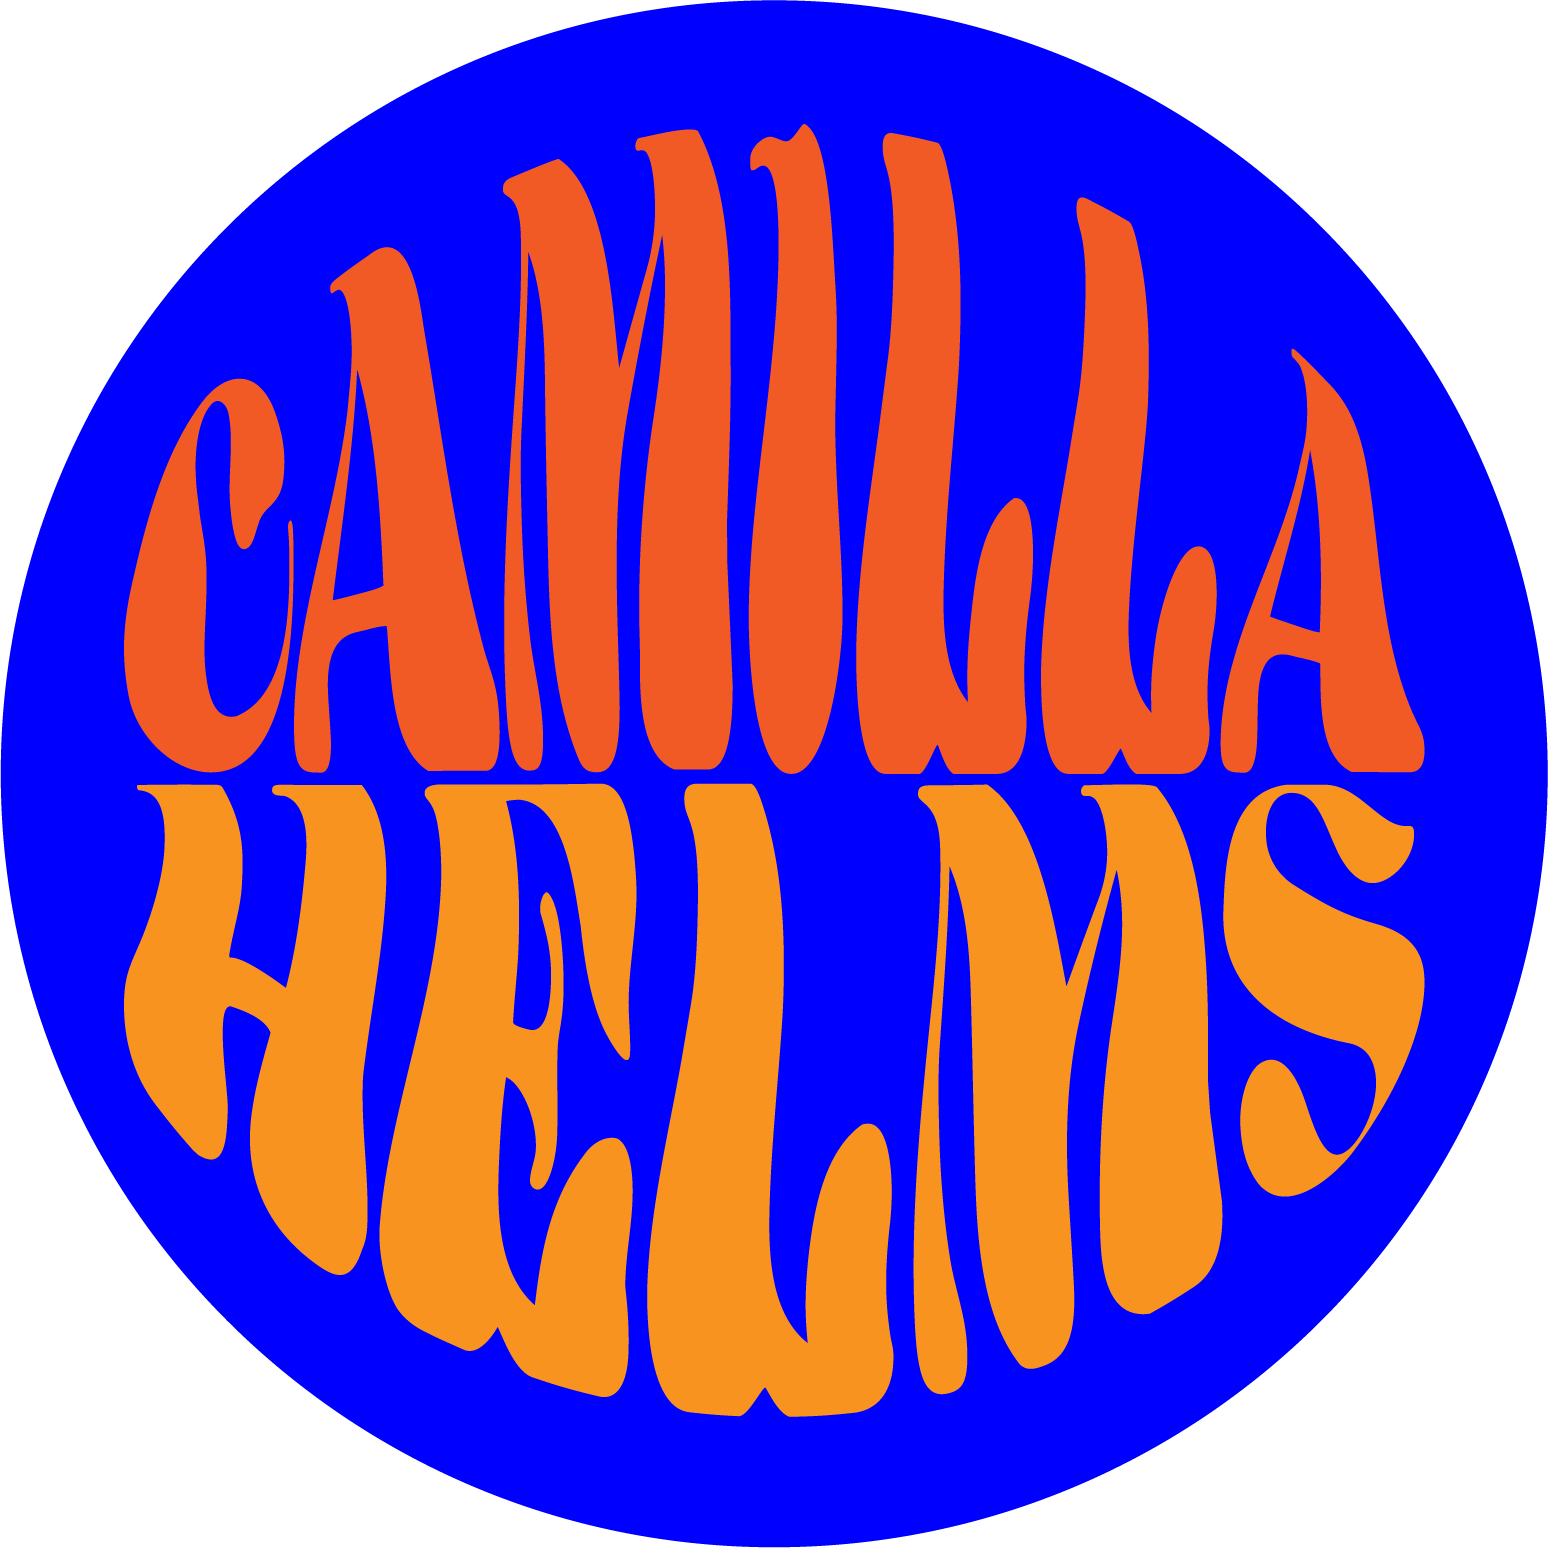 Camilla Helms